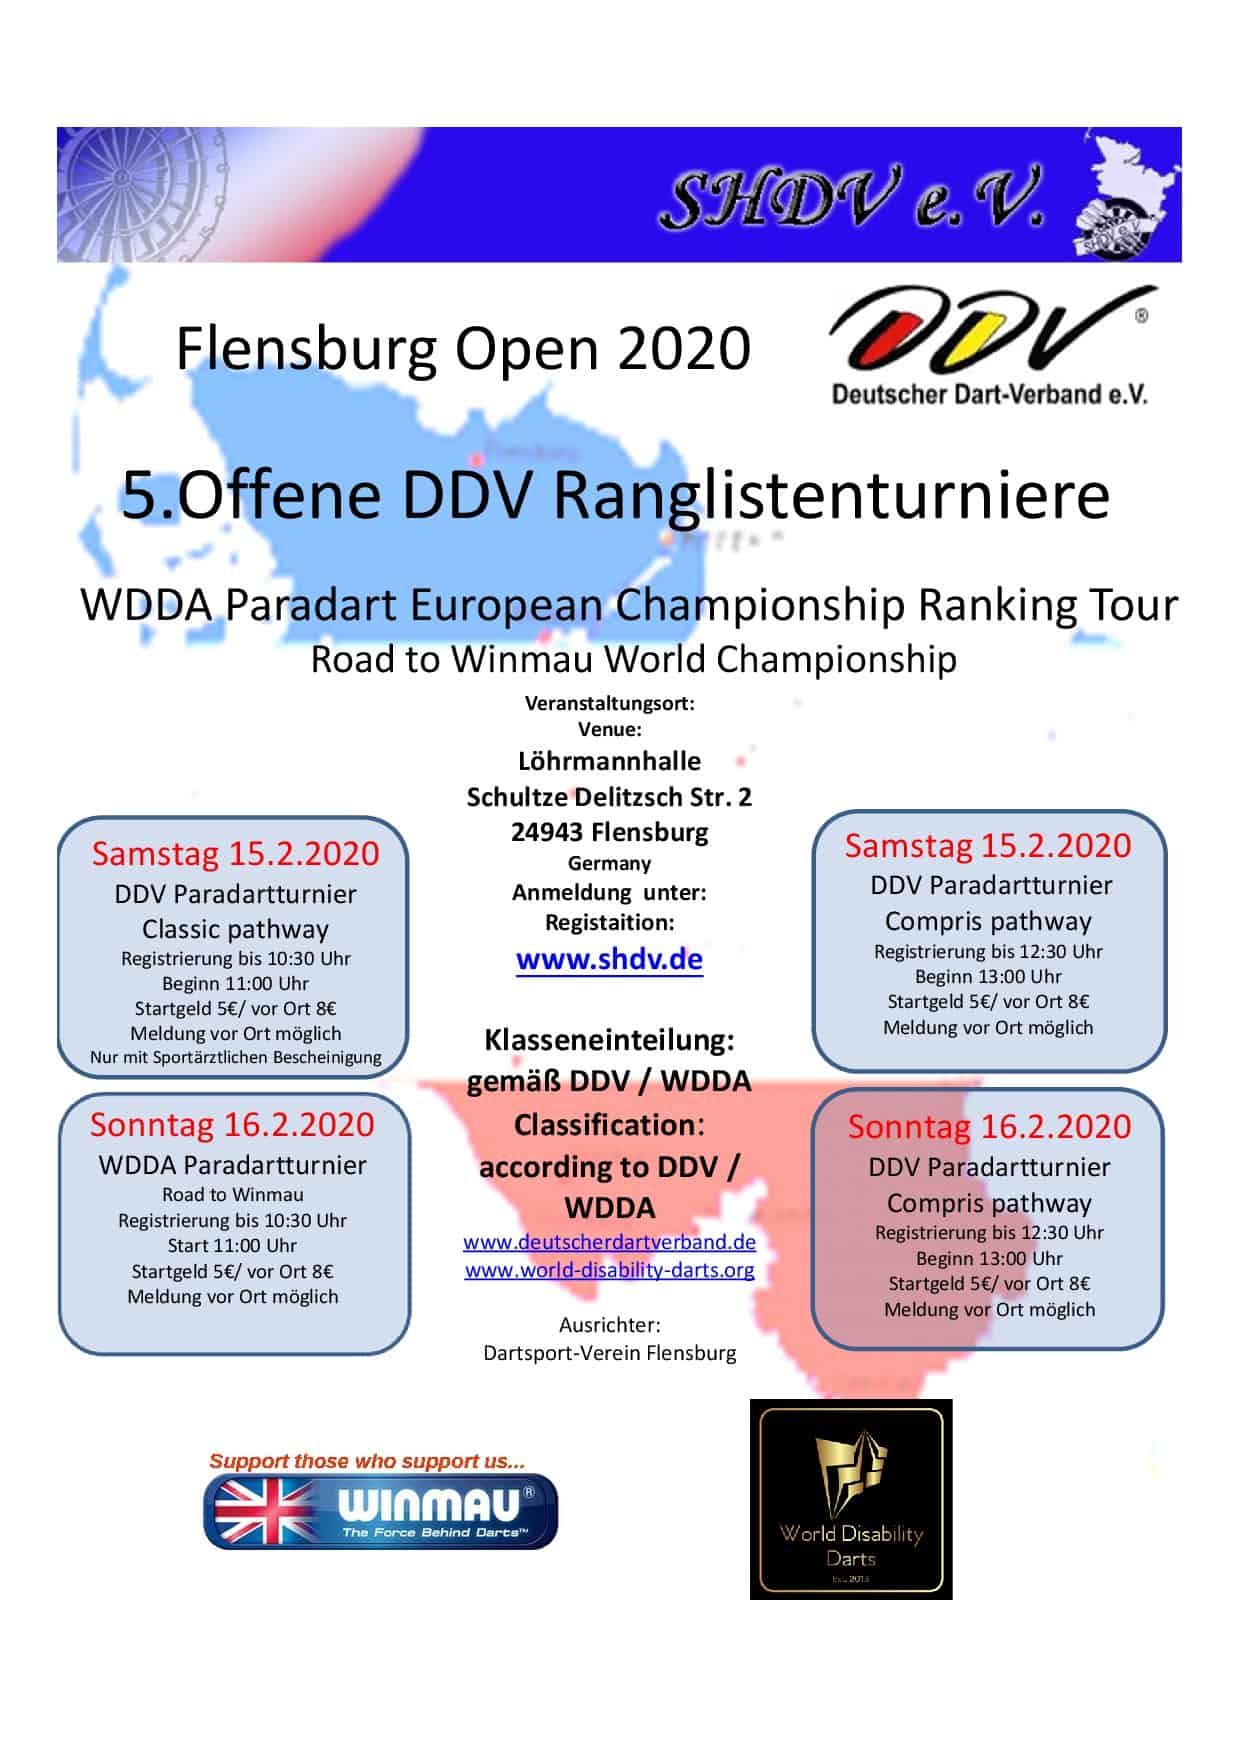 Flensburg Open 2020 Paradart